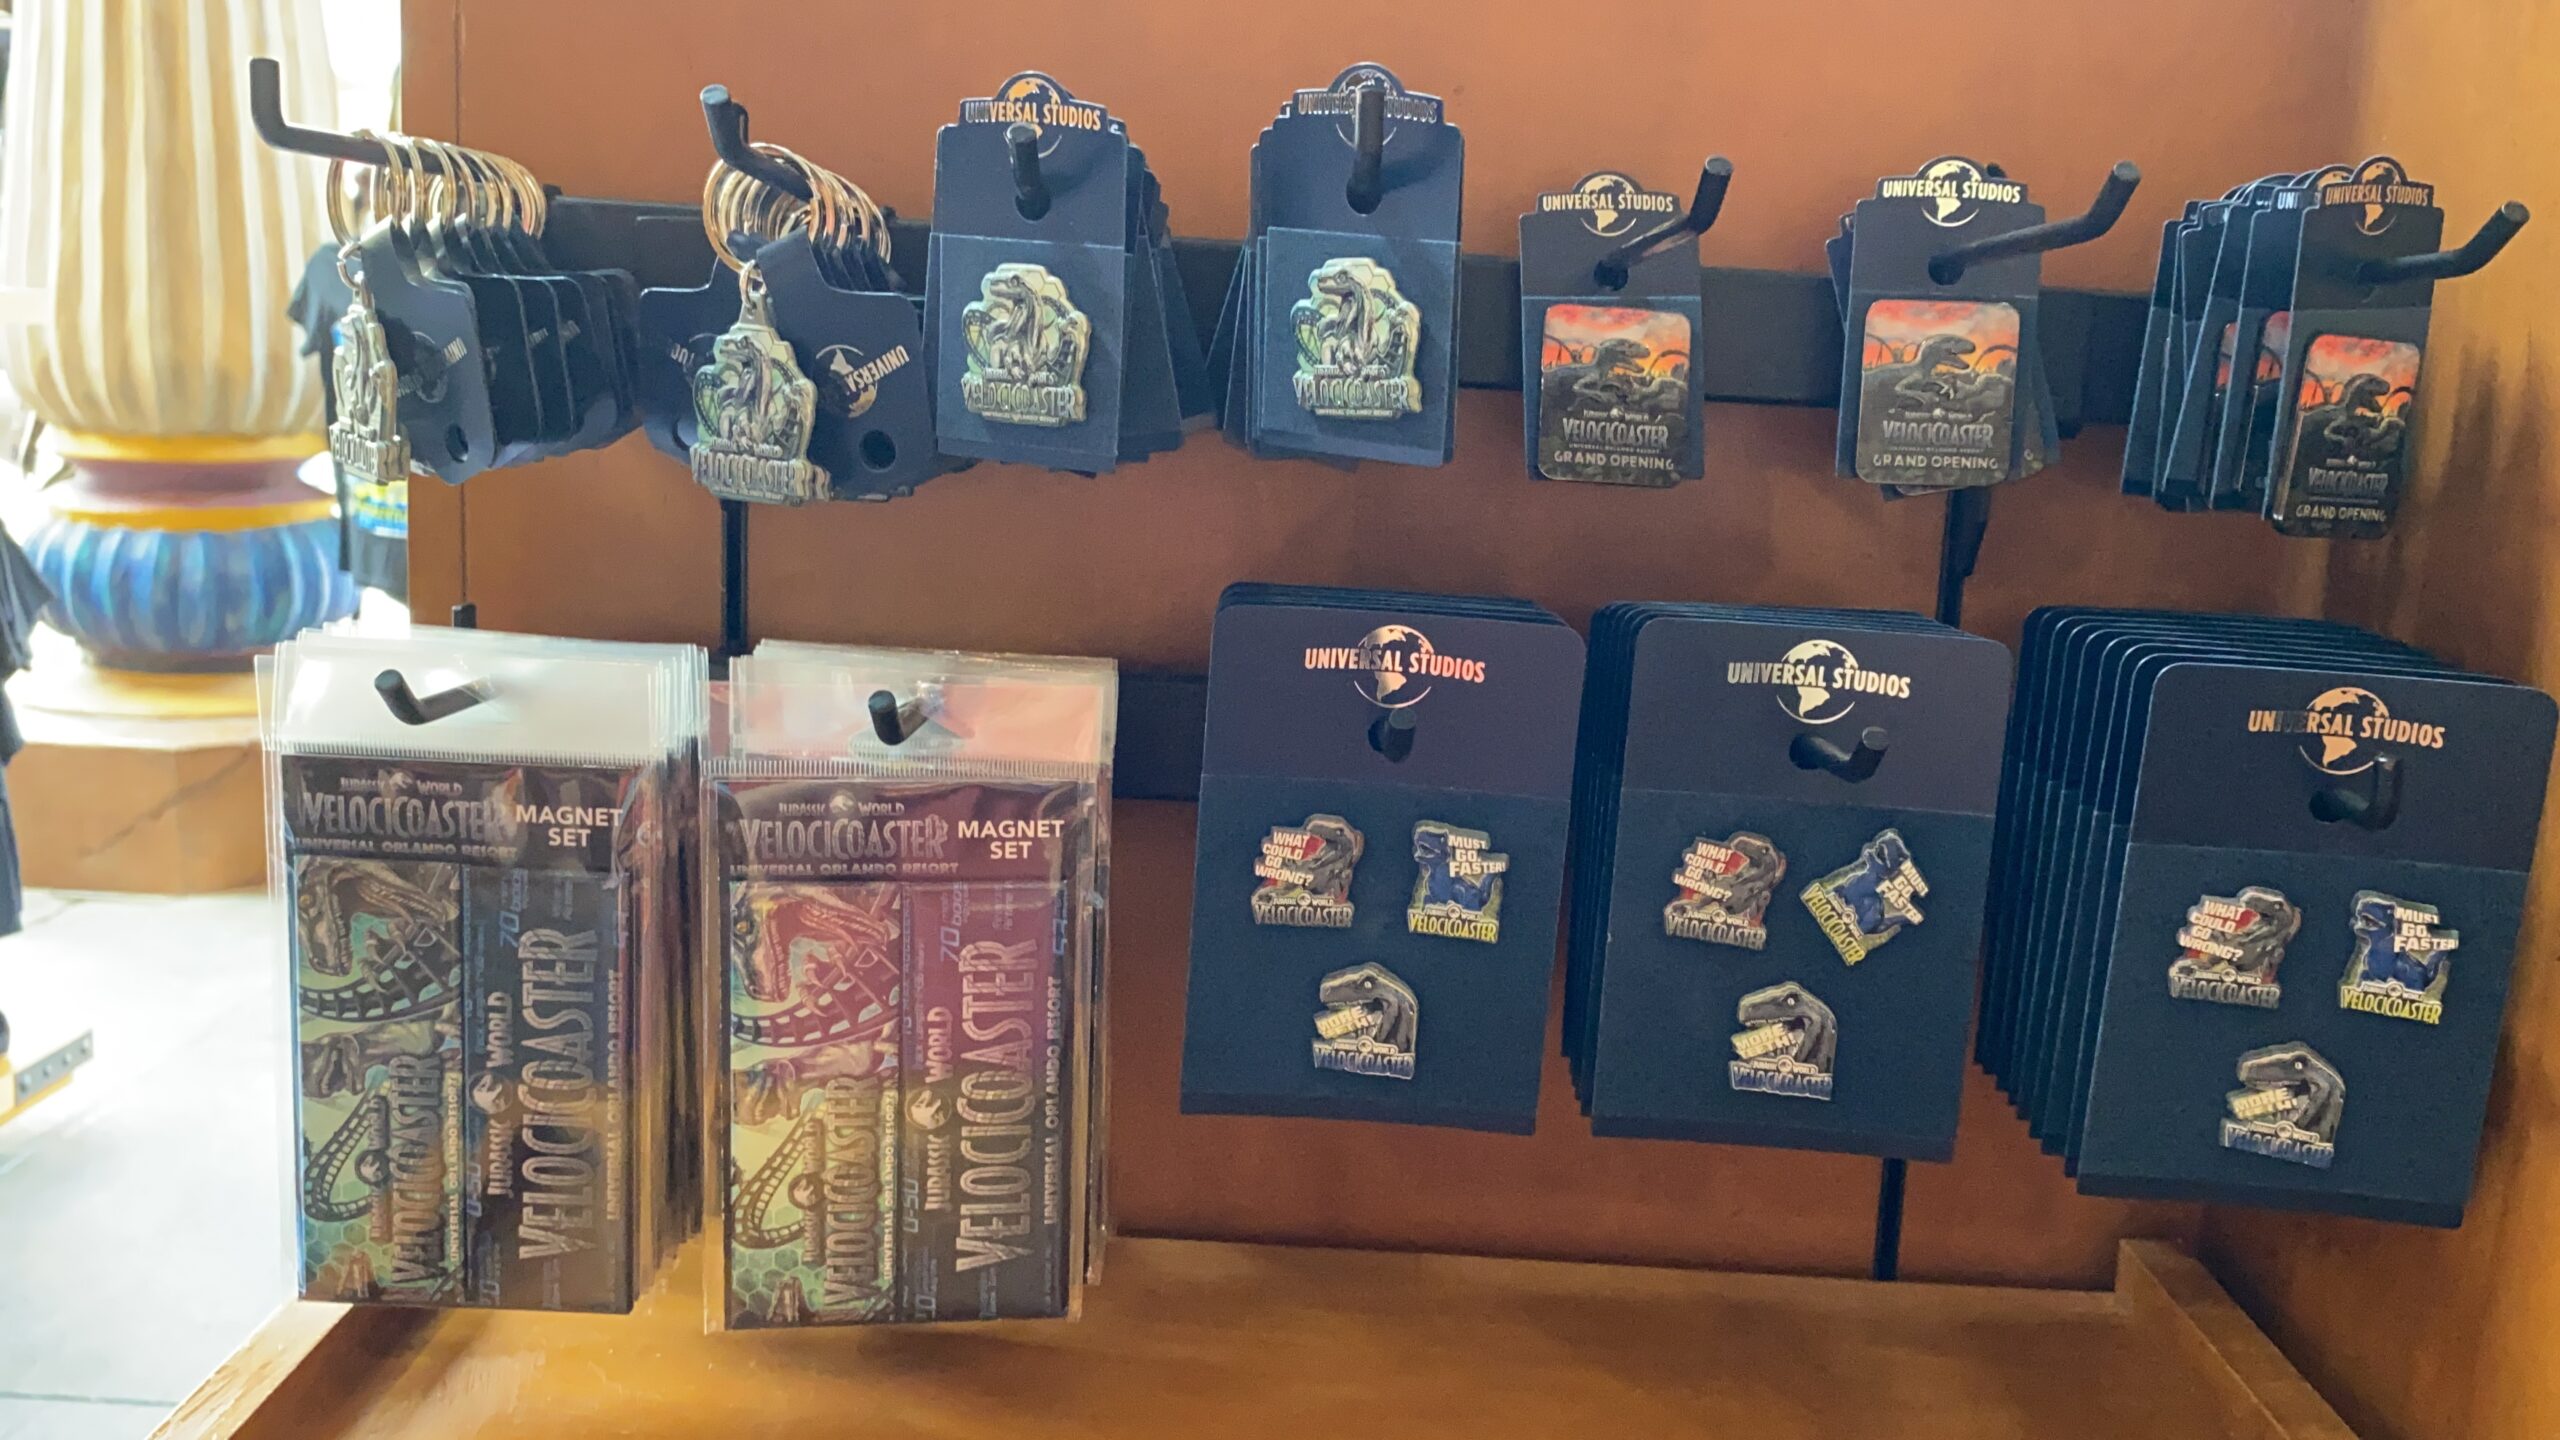 Jurassic World VelociCoaster Merchandise now Available in Universal Orlando